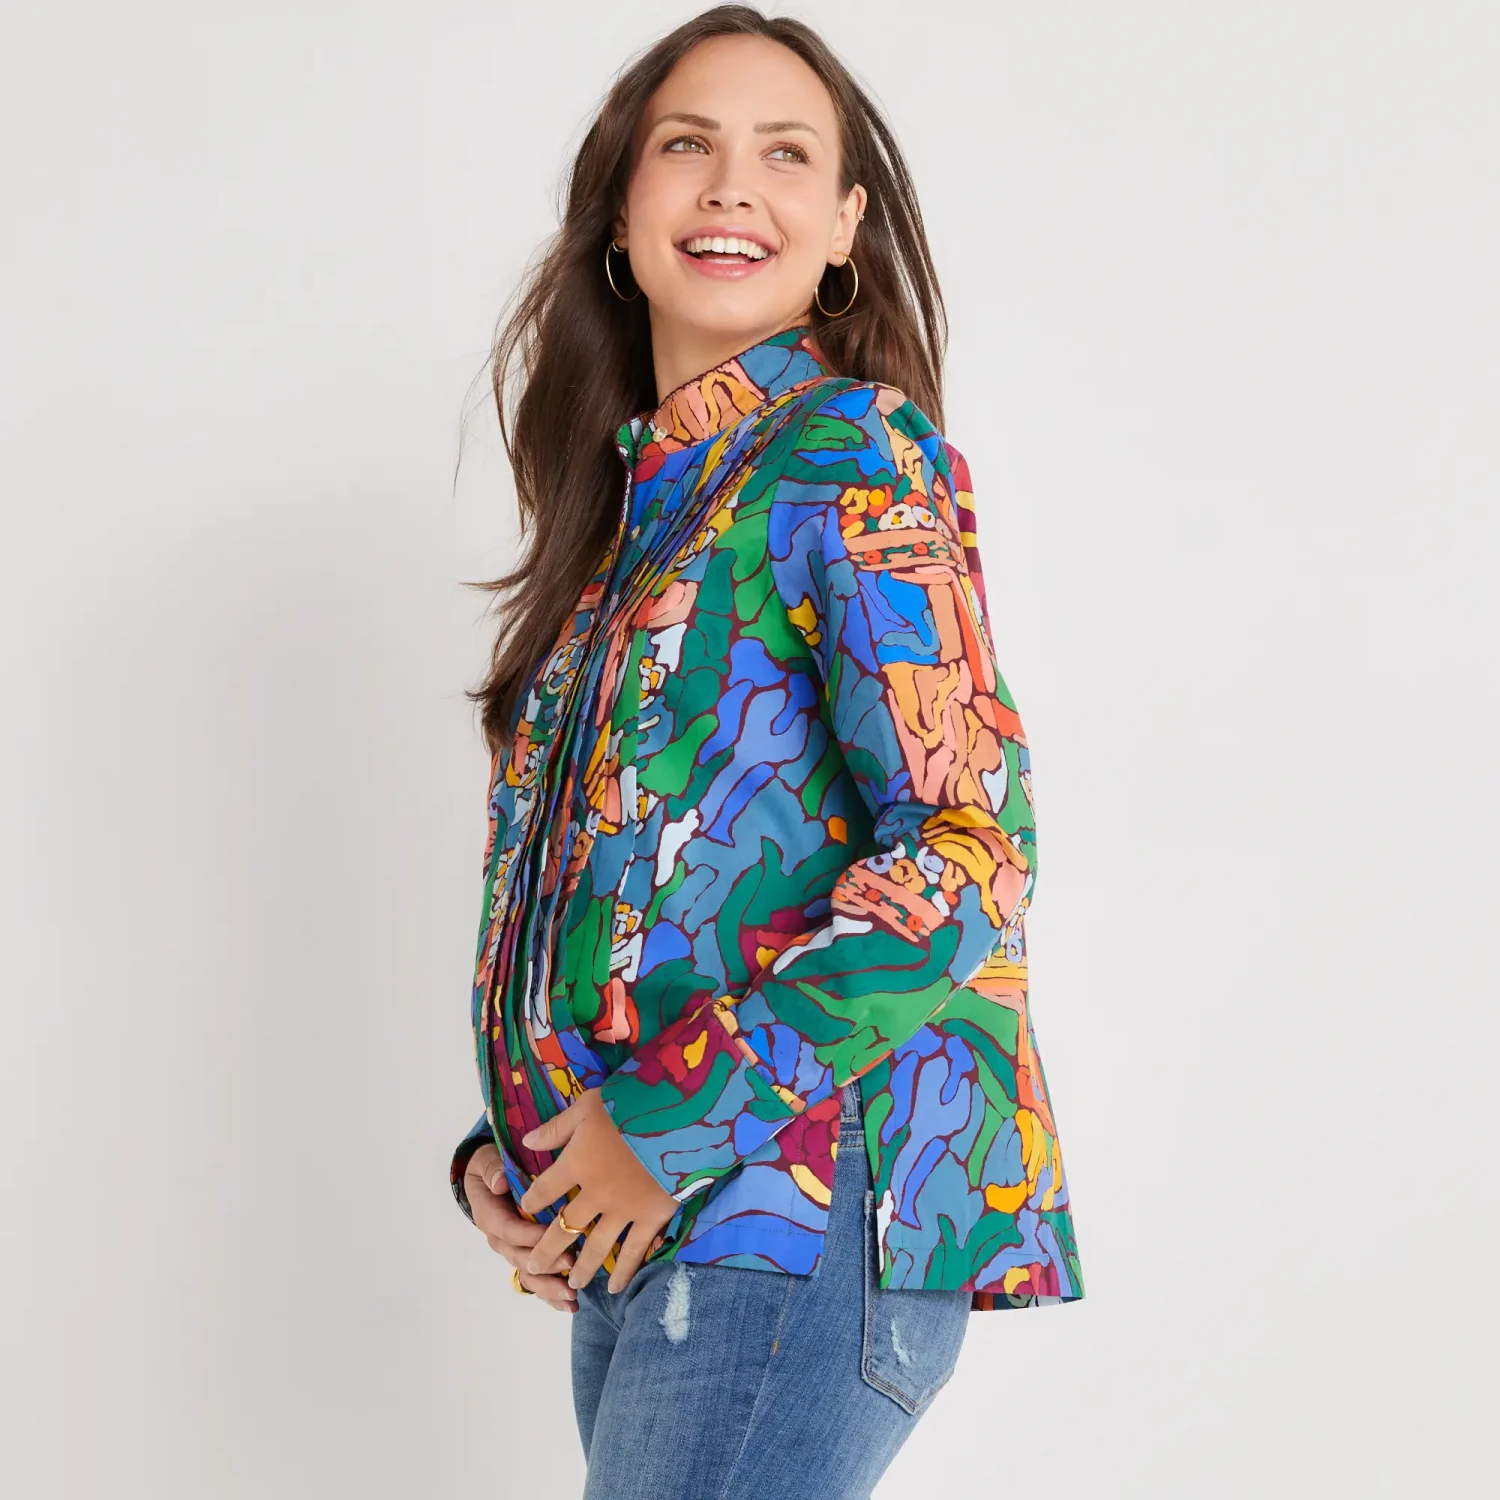 De Loreta brand contemporary and stylish maternity friendly button down printed shirts